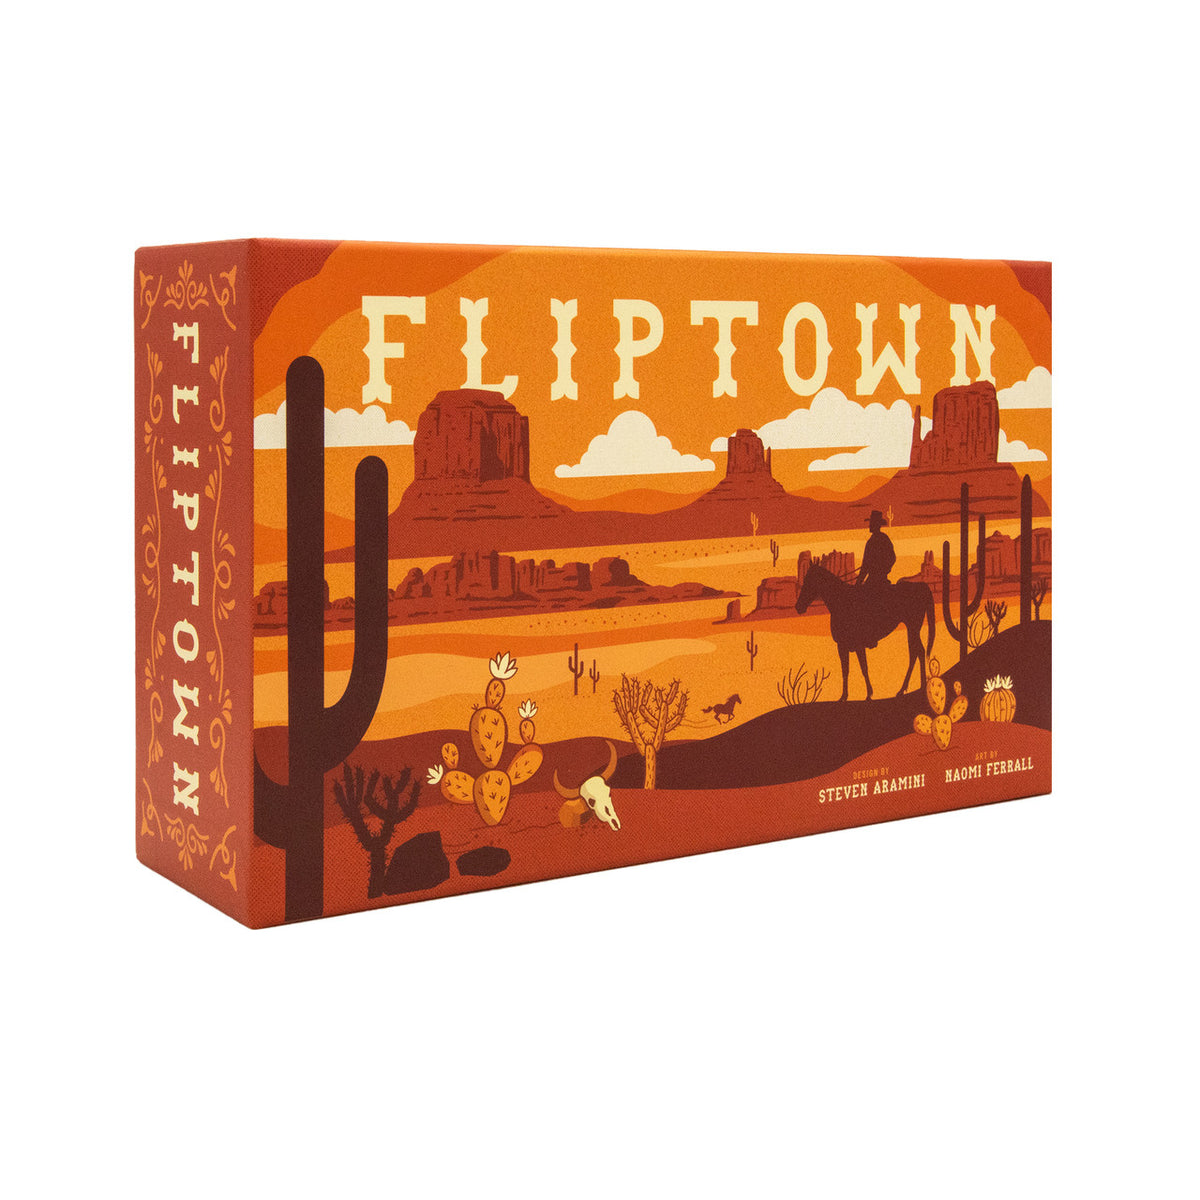 Fliptown - flip-and-write game